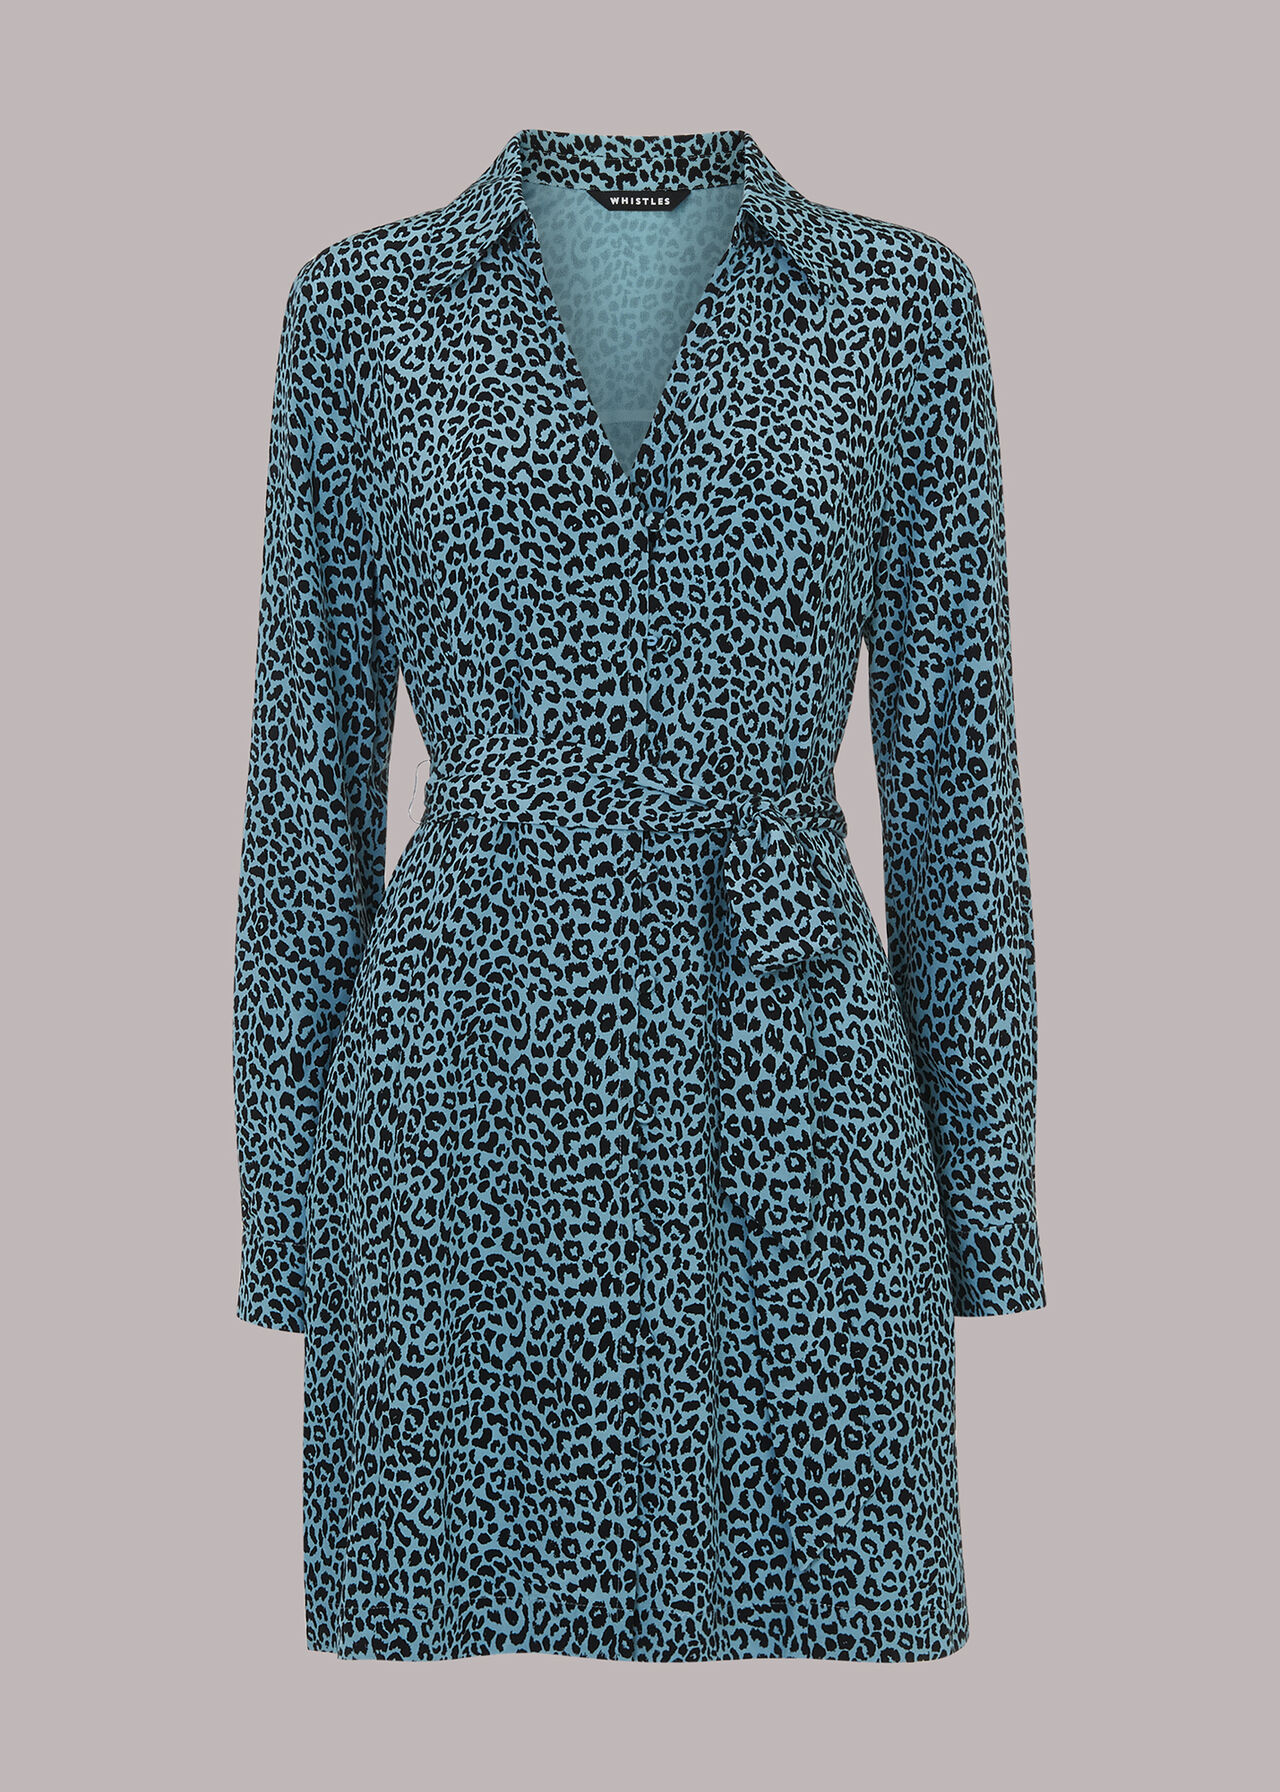 Contrast Leopard Belted Dress